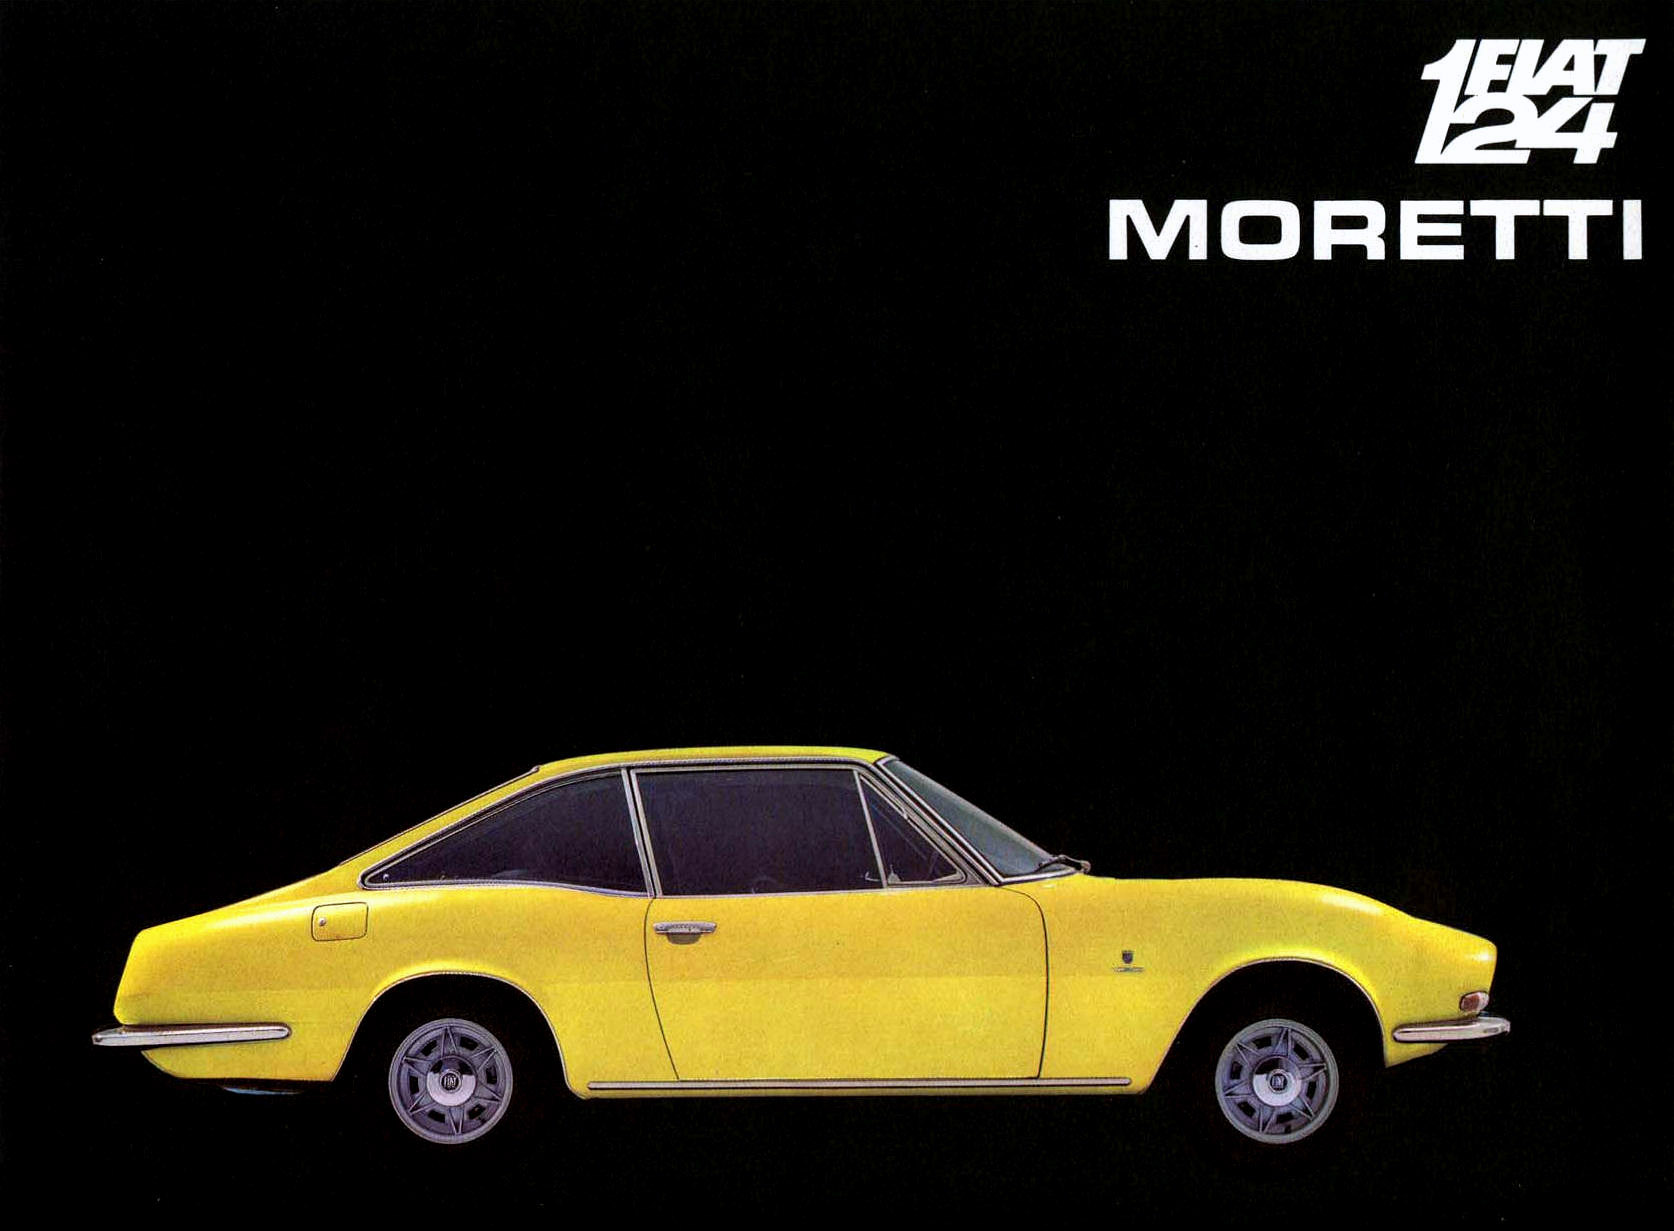 Fiat 124 Coupé (Moretti), 1967  - Brochure